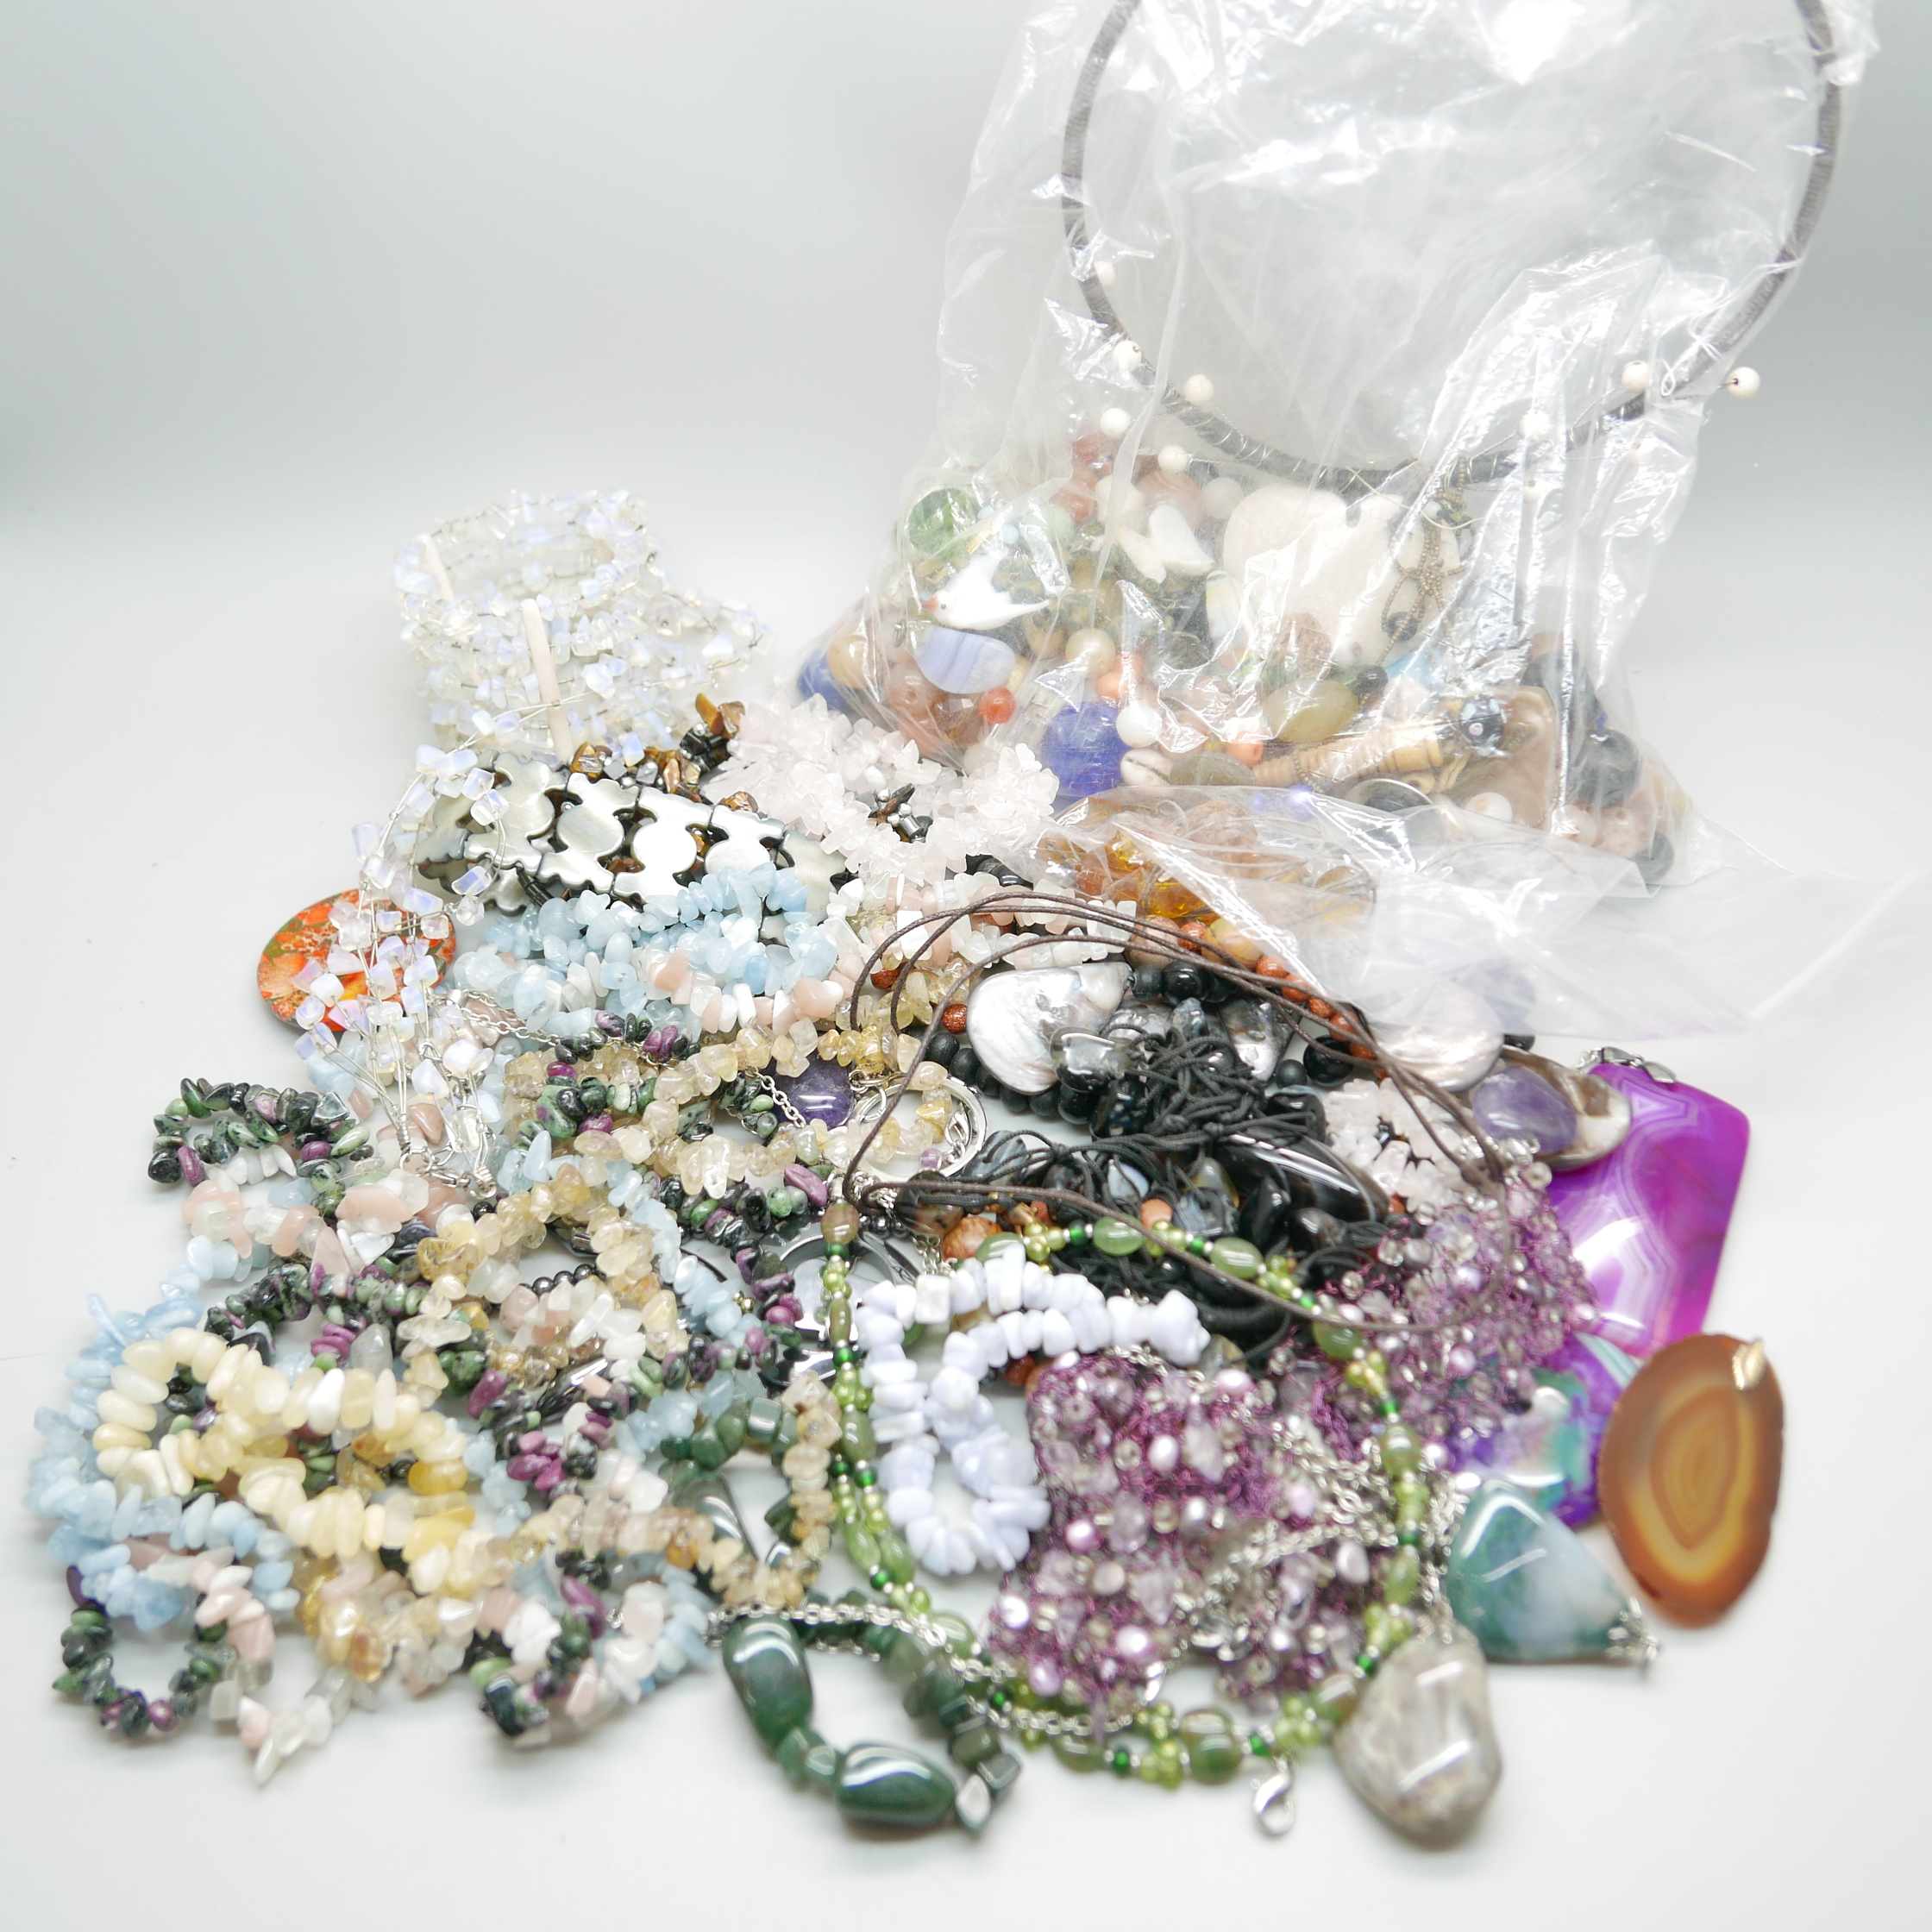 Gemstone jewellery and loose beads